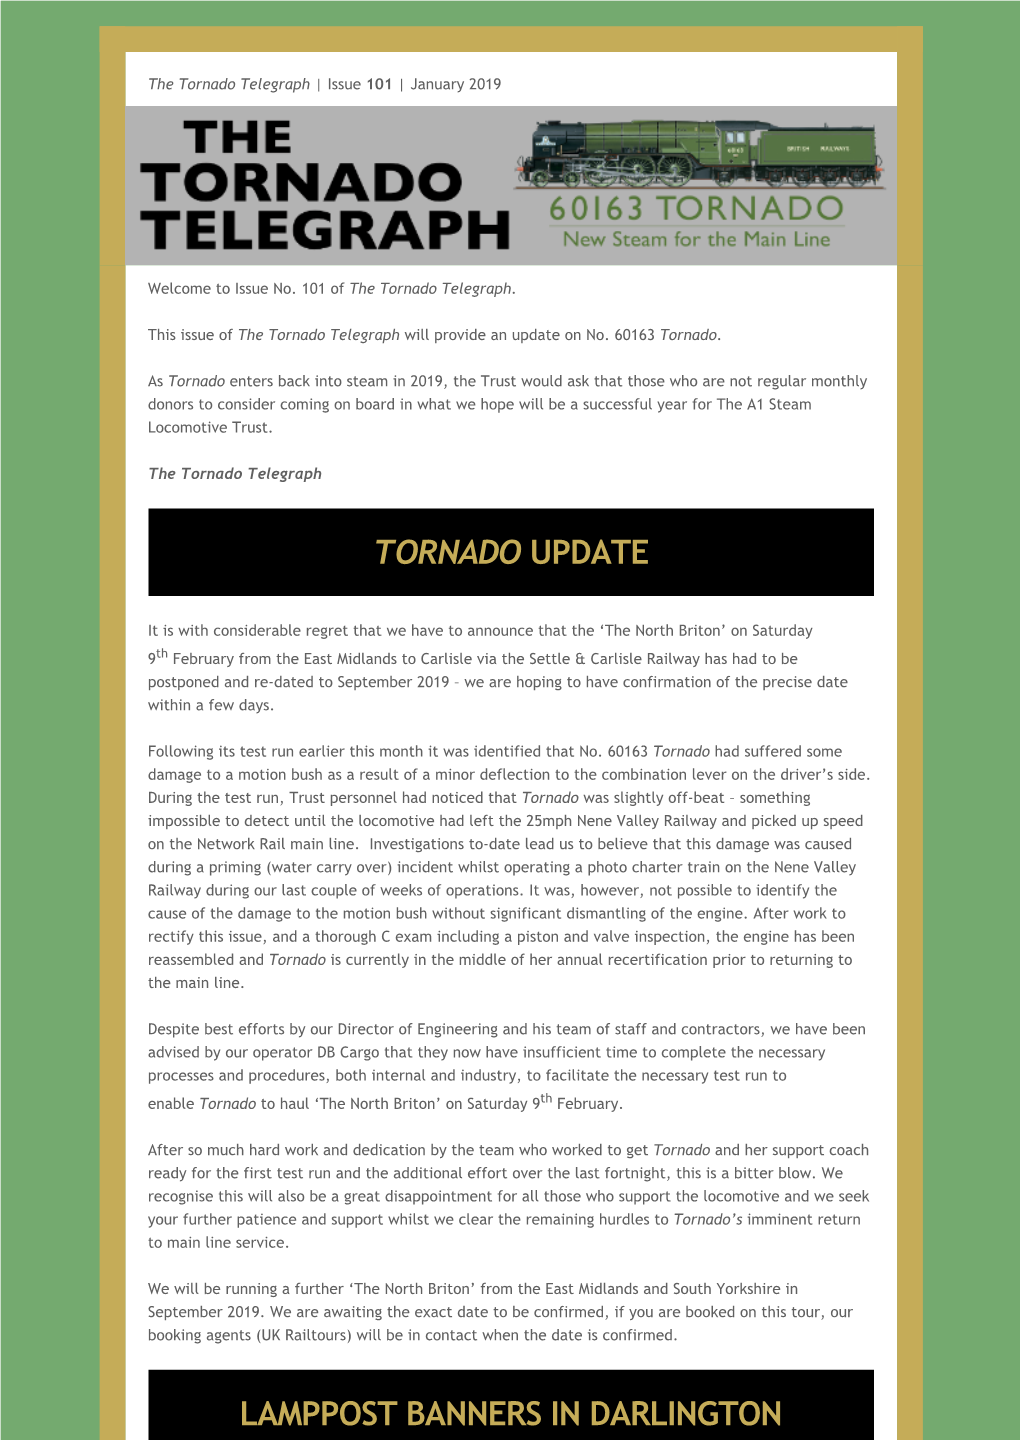 Tornado Update Lamppost